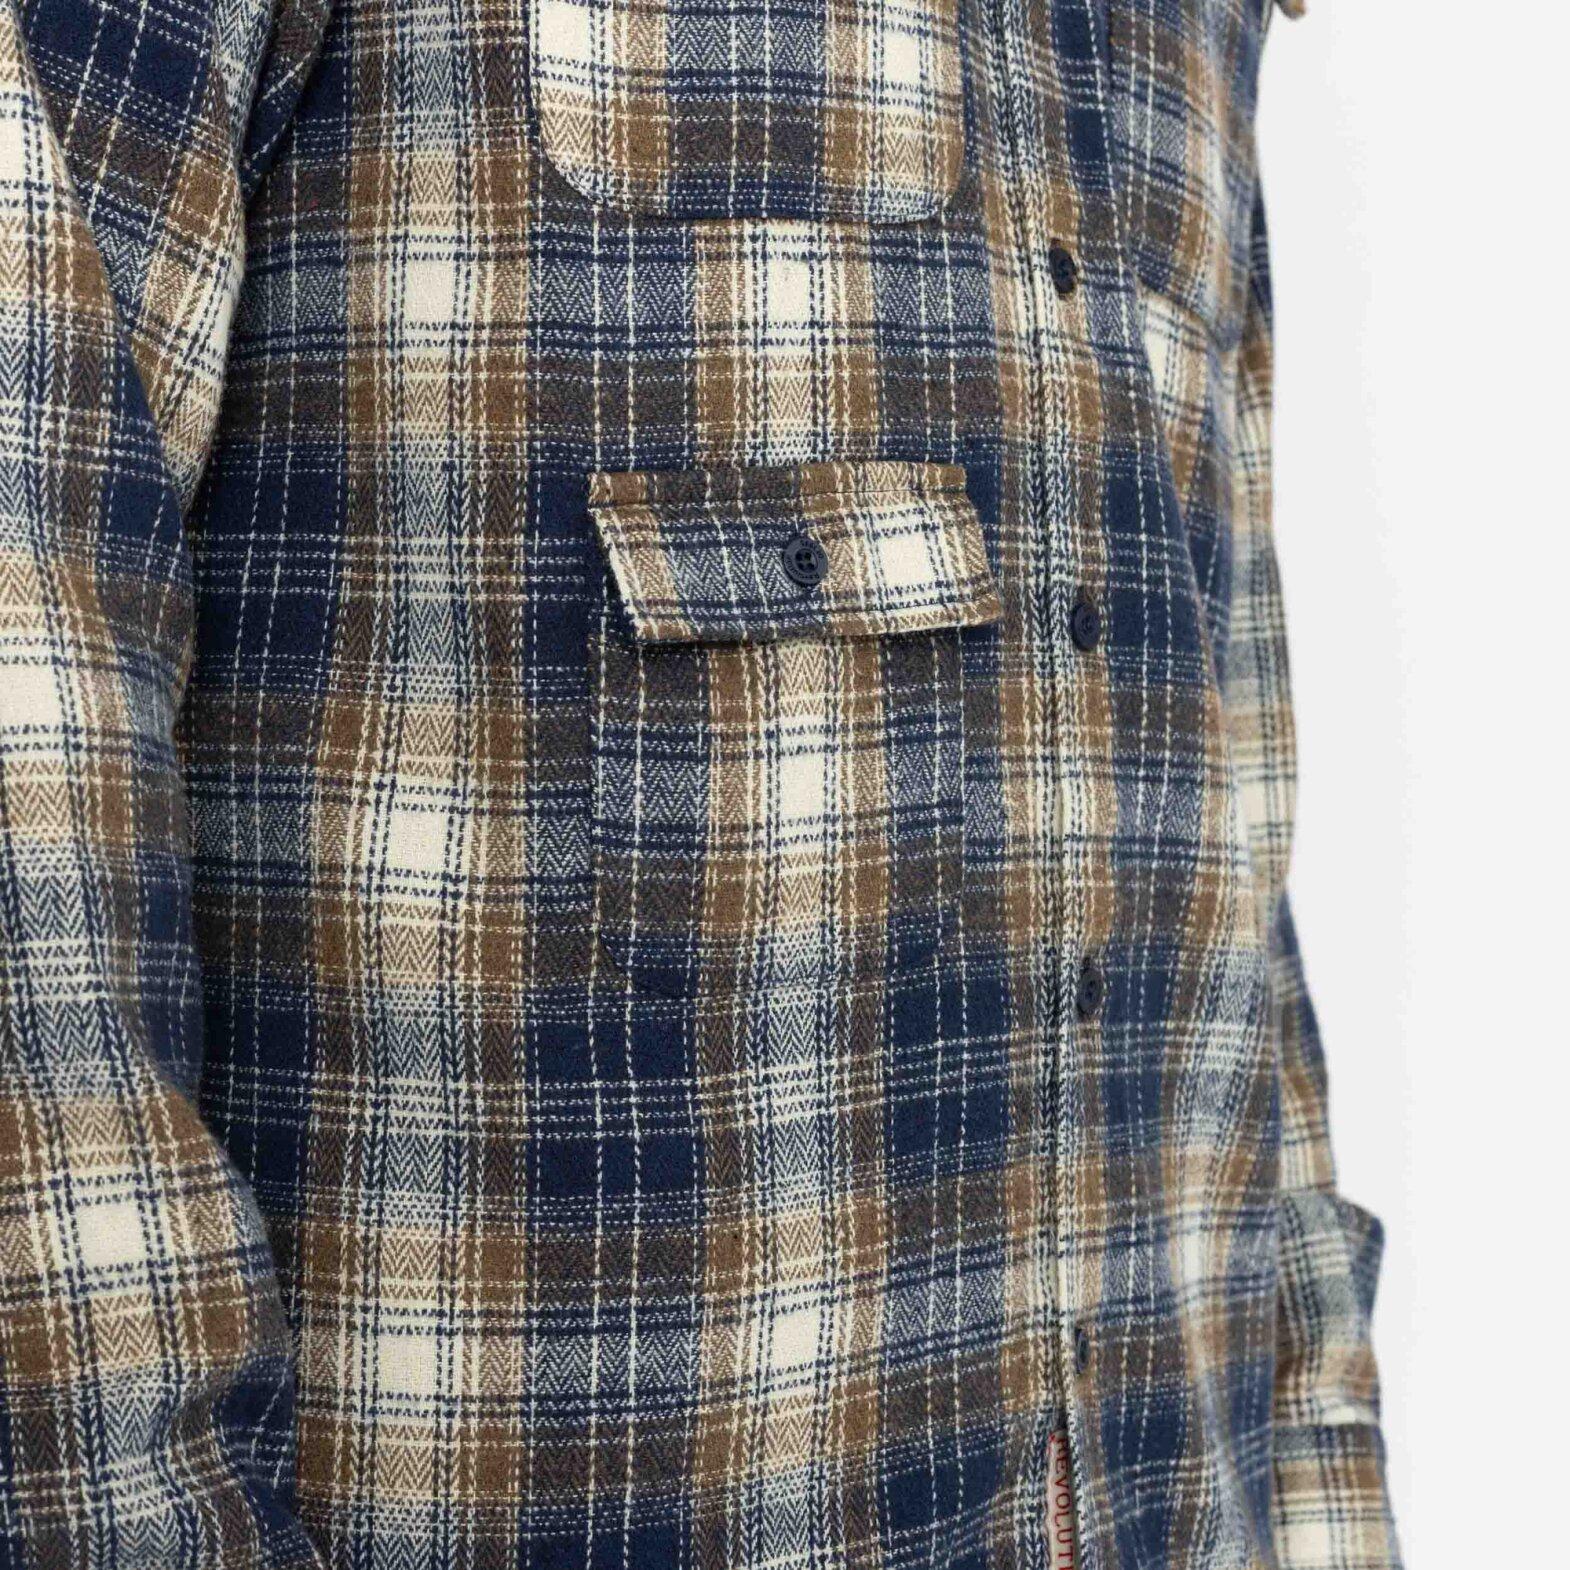 Revolution multi pocket shirt 1570x1570c 3 